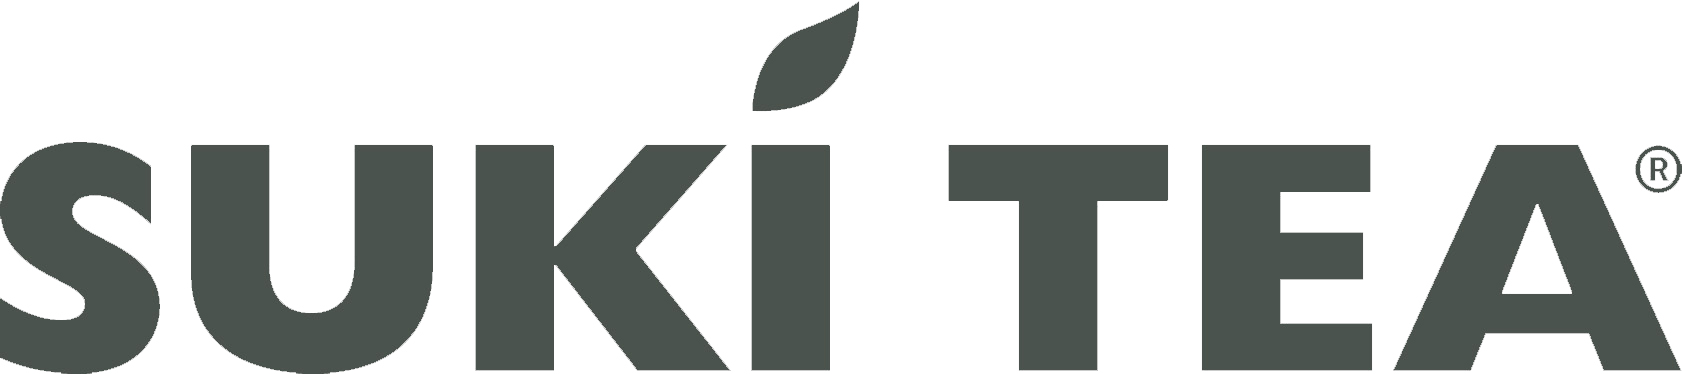 logo for Suki Tea